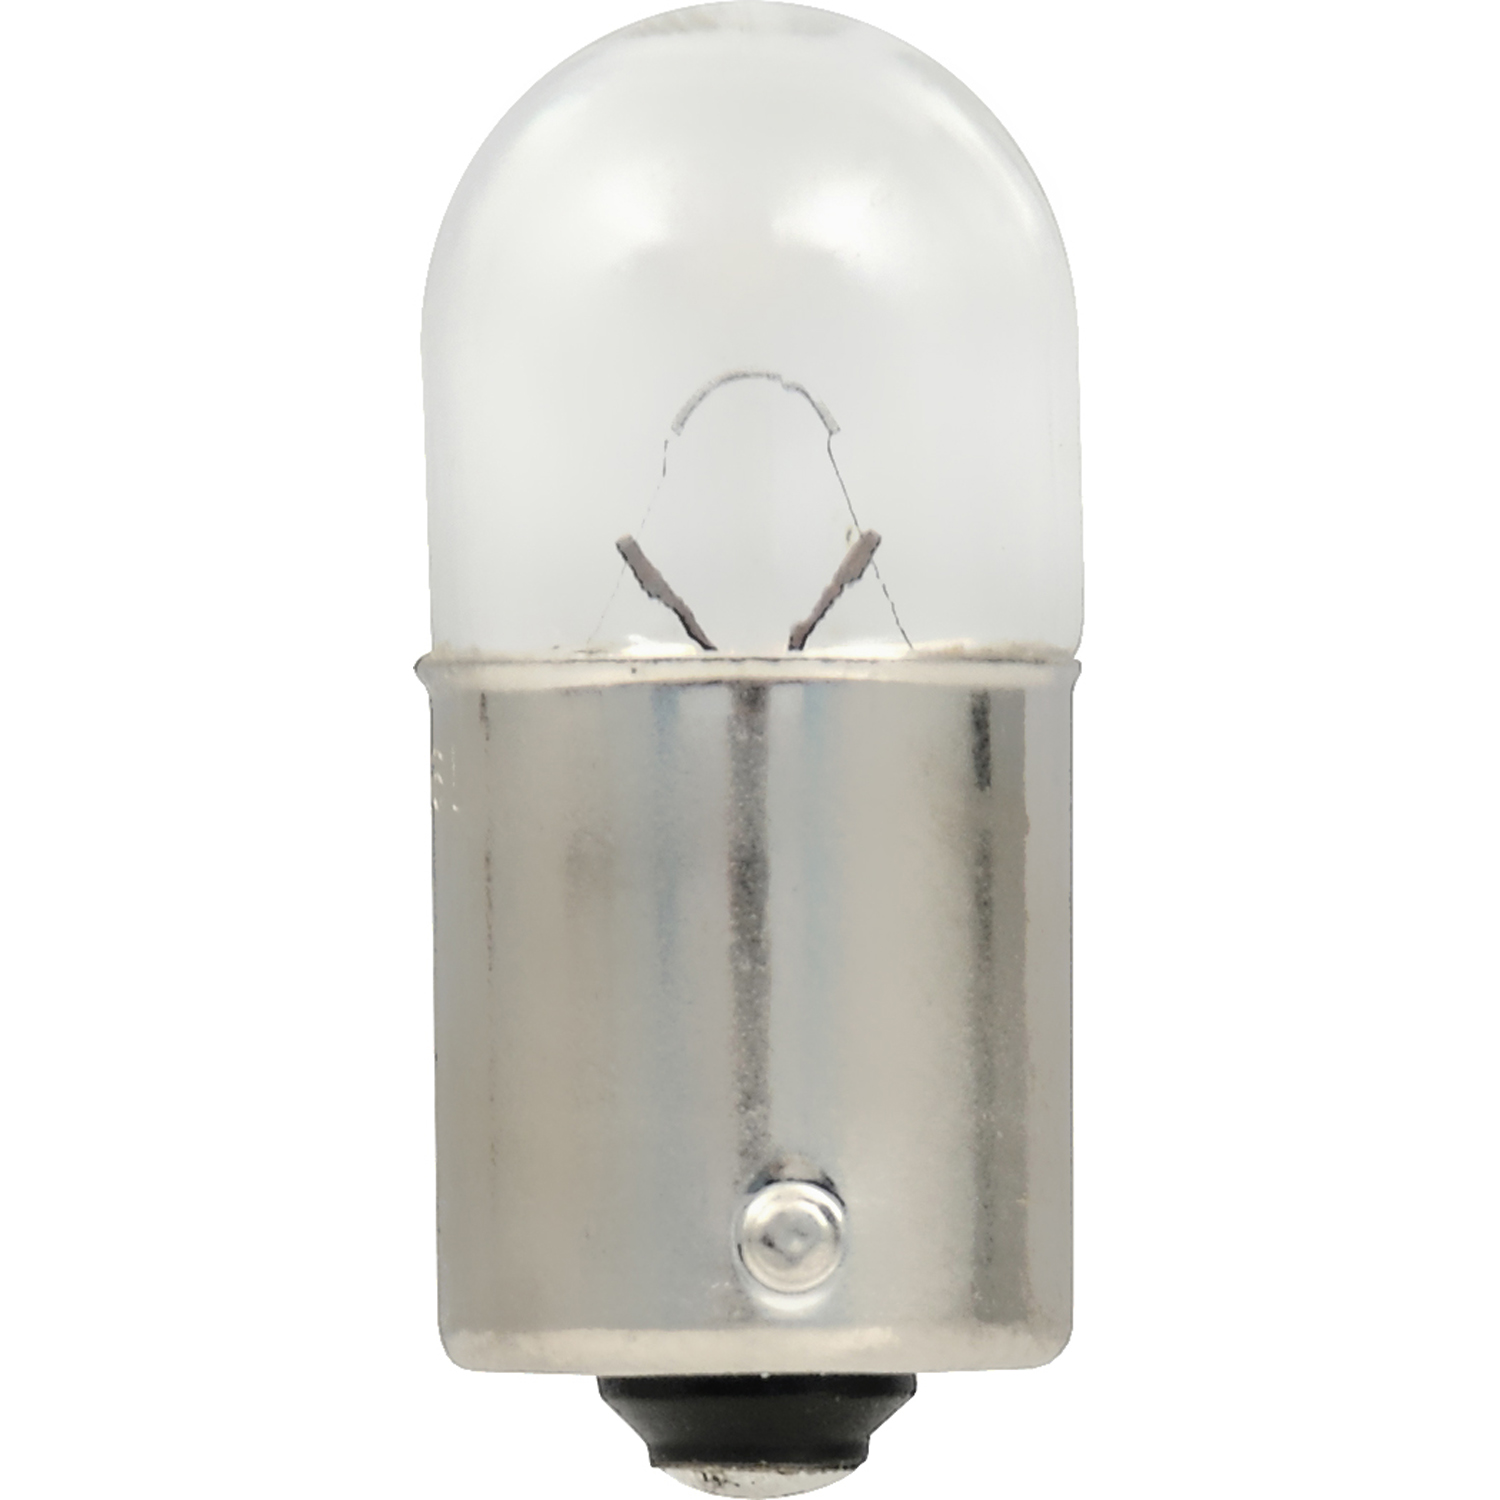 SYLVANIA RETAIL PACKS - 10-Pack Box Side Marker Light Bulb (Rear) - SYR 89.TP